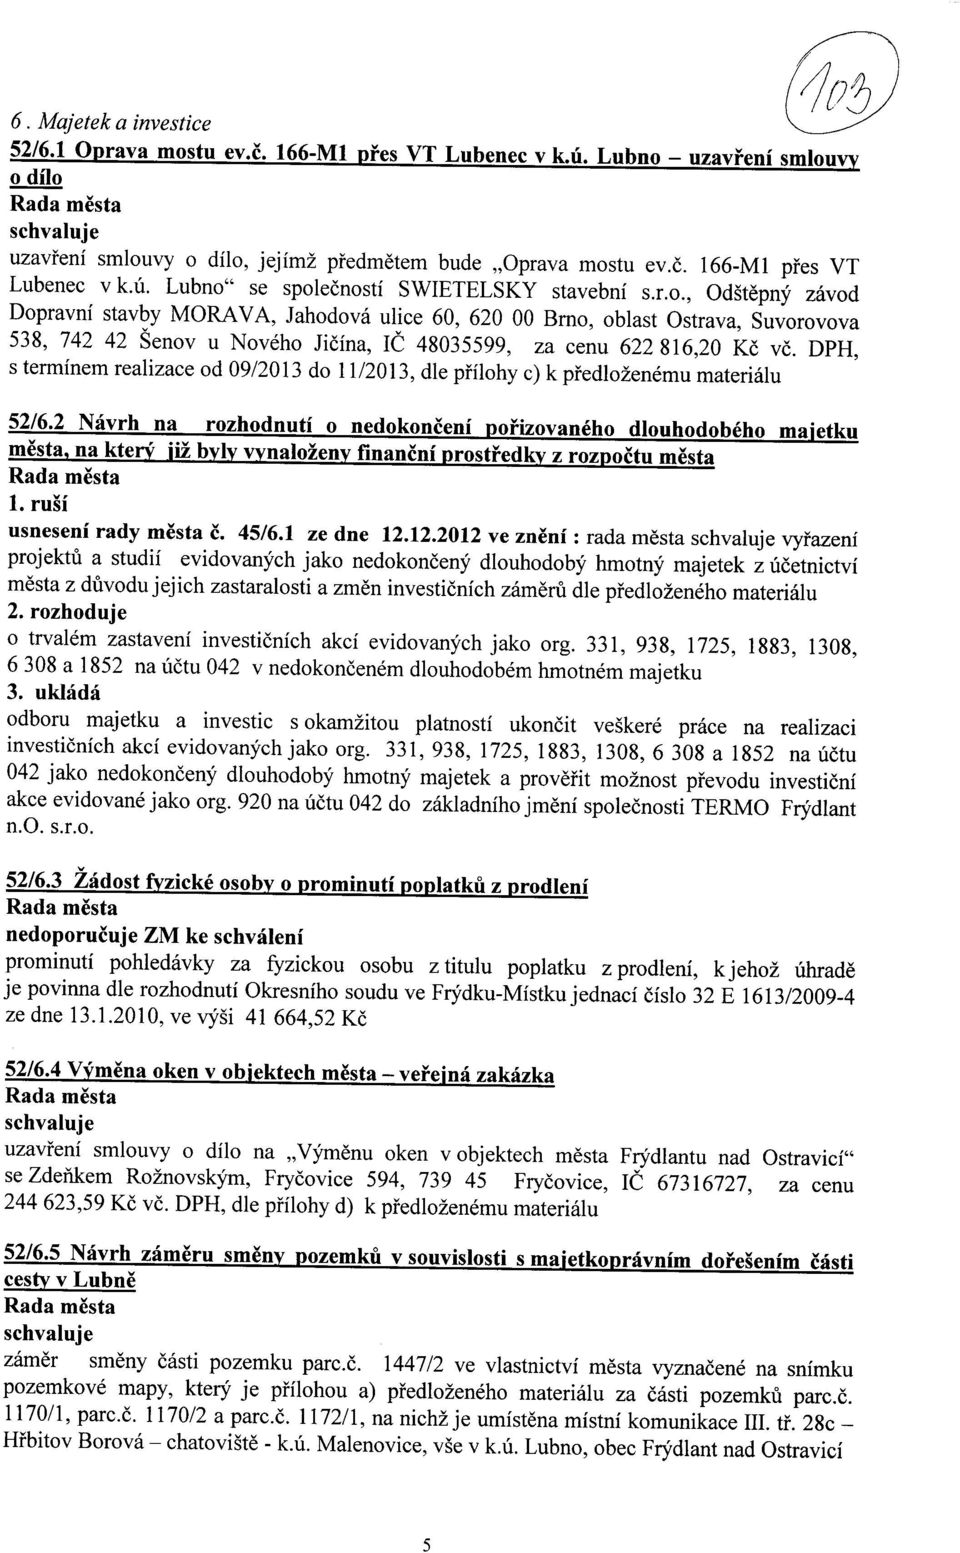 DPH, s terminem realizace od 09/2013 do 11/2013, dle piilohy c) k piedlo2enemu materialu 52/6.